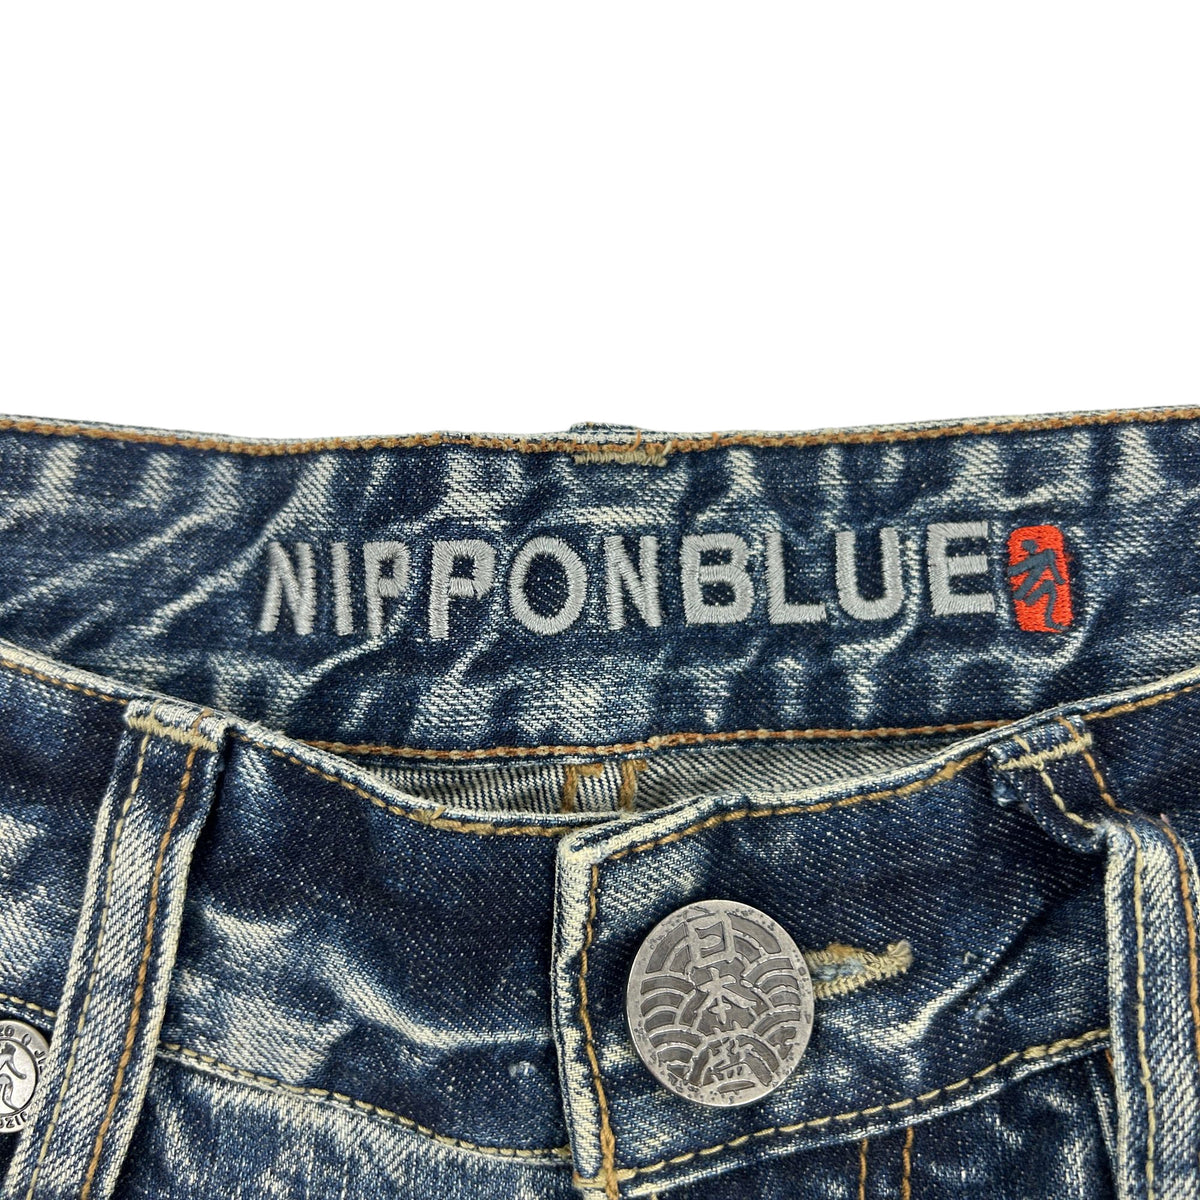 Vintage Monster Embroidered Japanese Denim Jeans Size W30